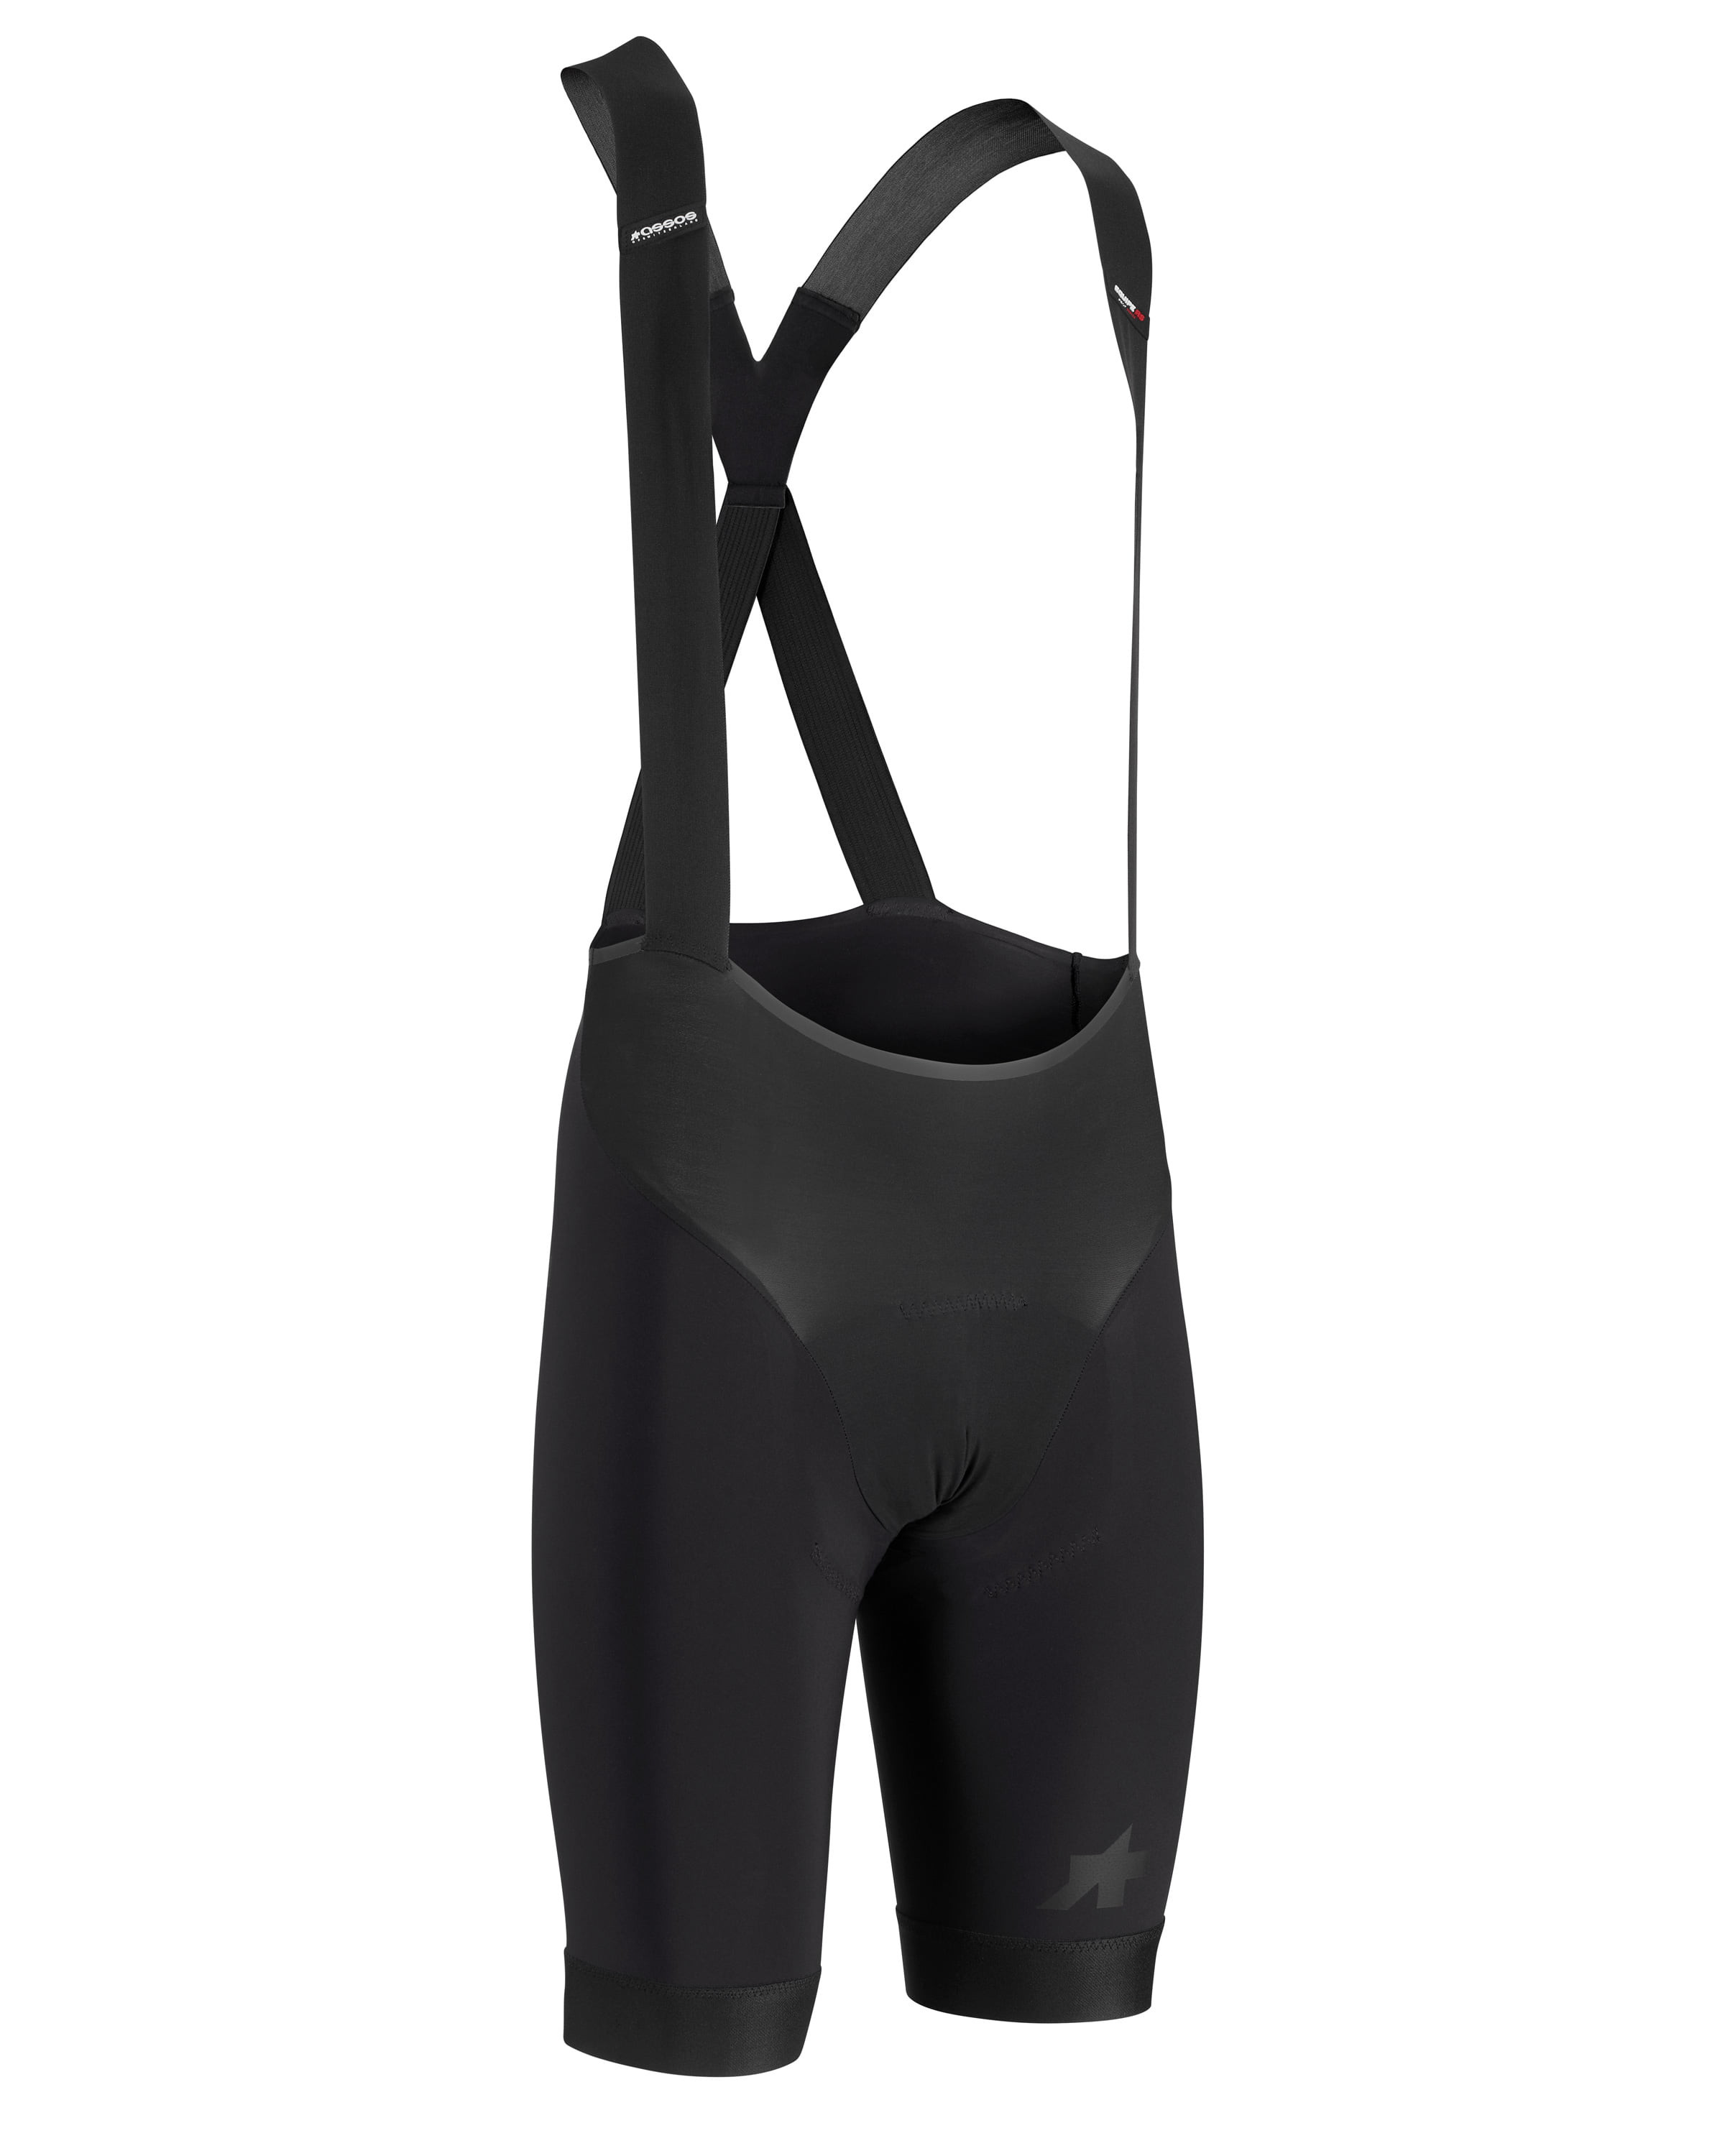 Assos Men's Black Equipe RSR S9 Bib Shorts